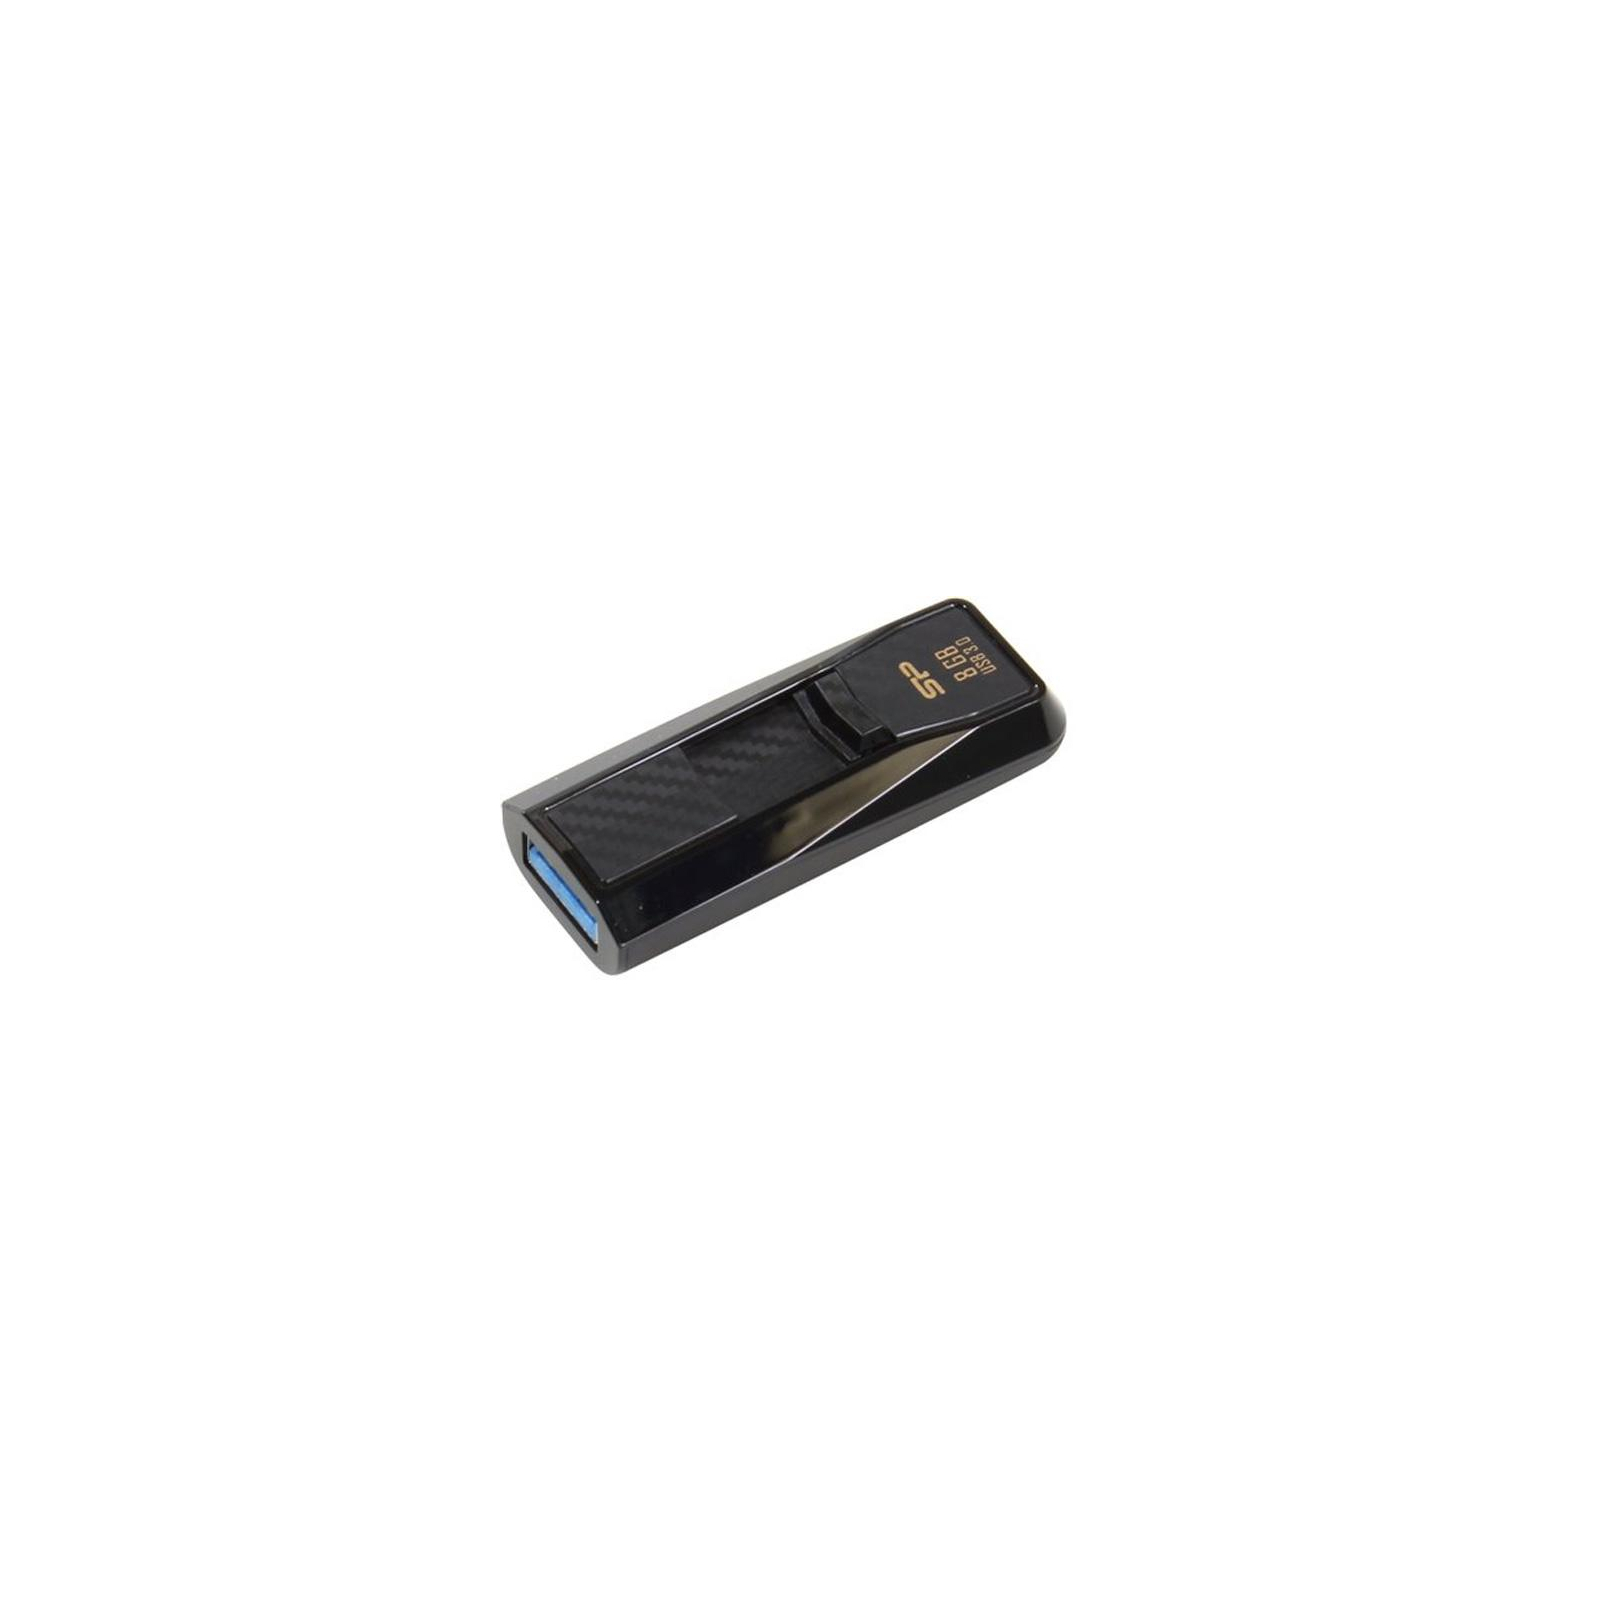 USB флеш накопитель Silicon Power 8GB B50 Black USB 3.0 (SP008GBUF3B50V1K) изображение 3